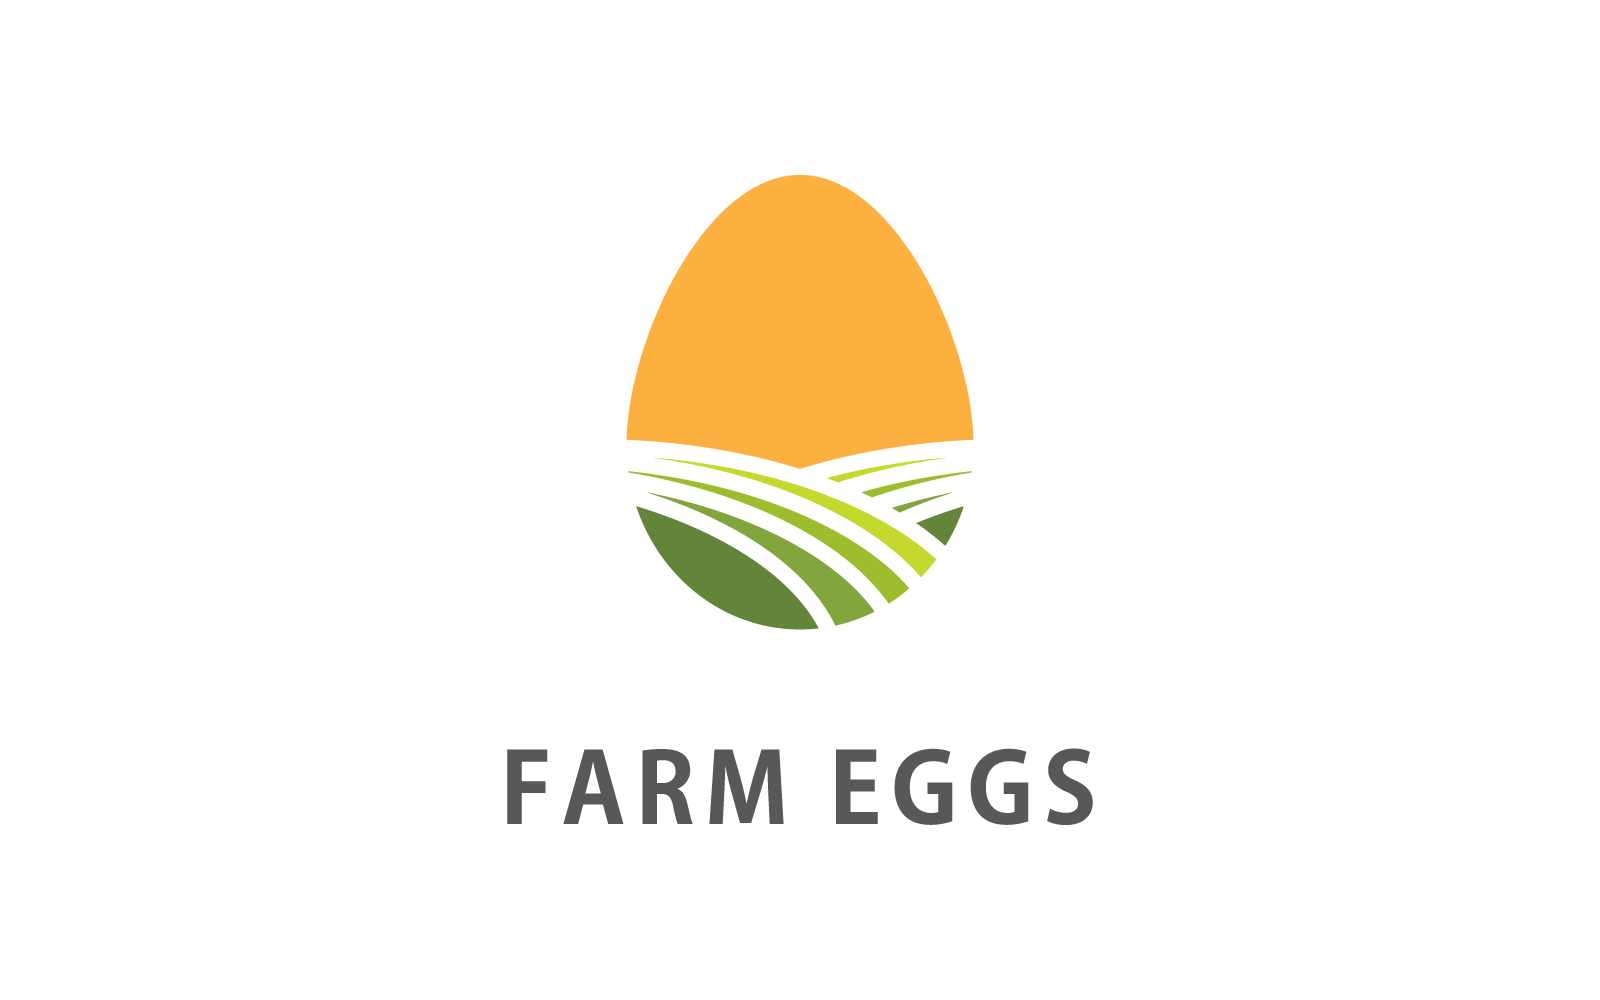 Farm Egg ilustrace logo vektorové plochý design